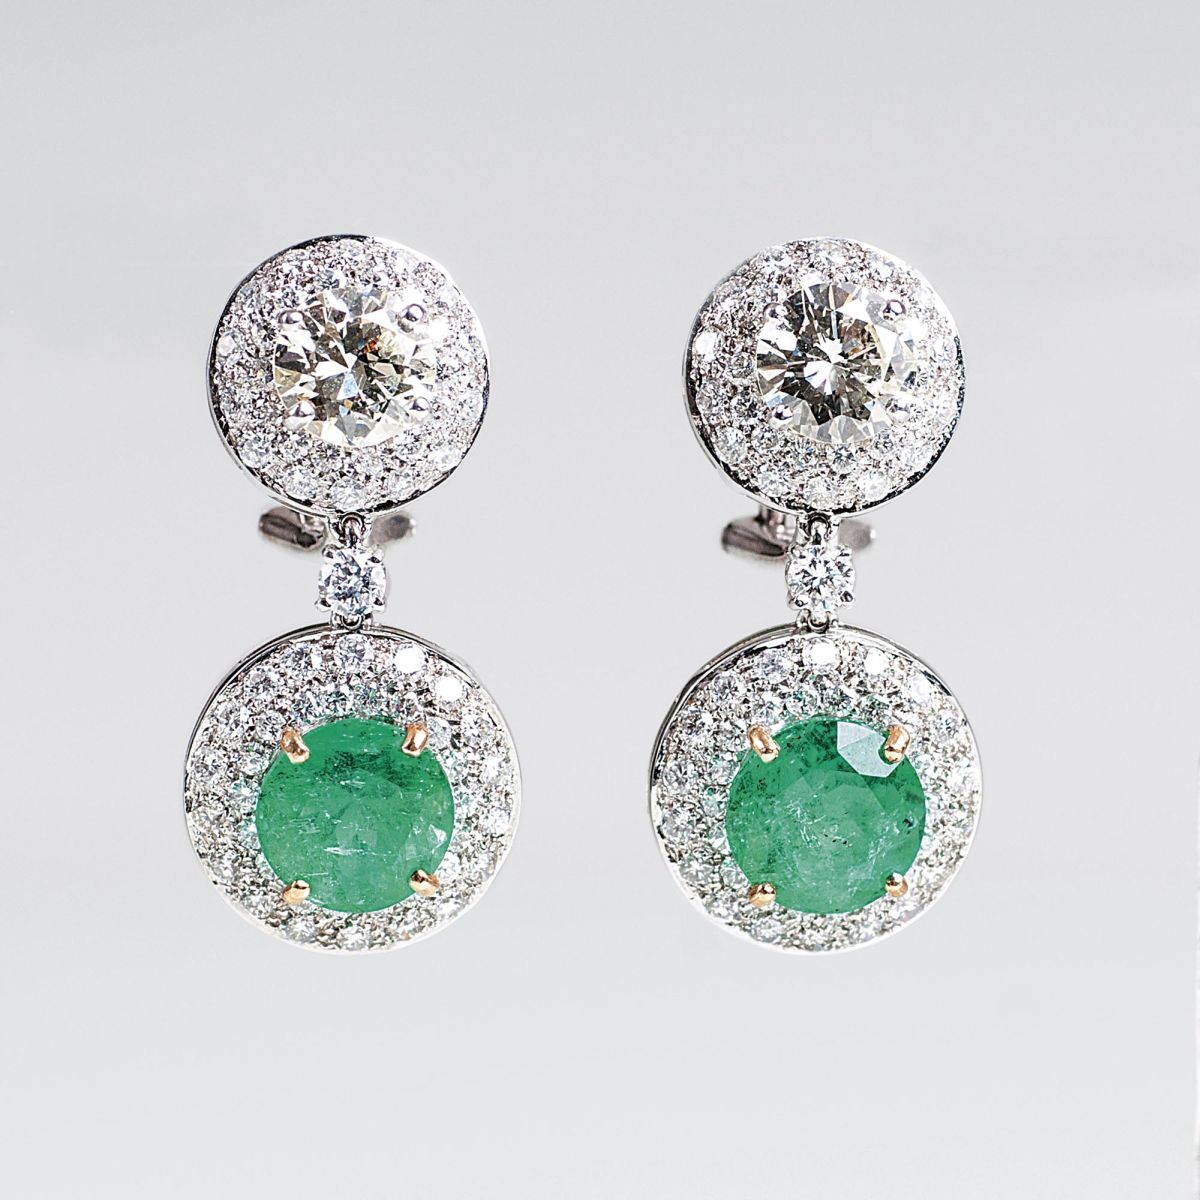 A Pair of very fine Diamond Emerald Earrings